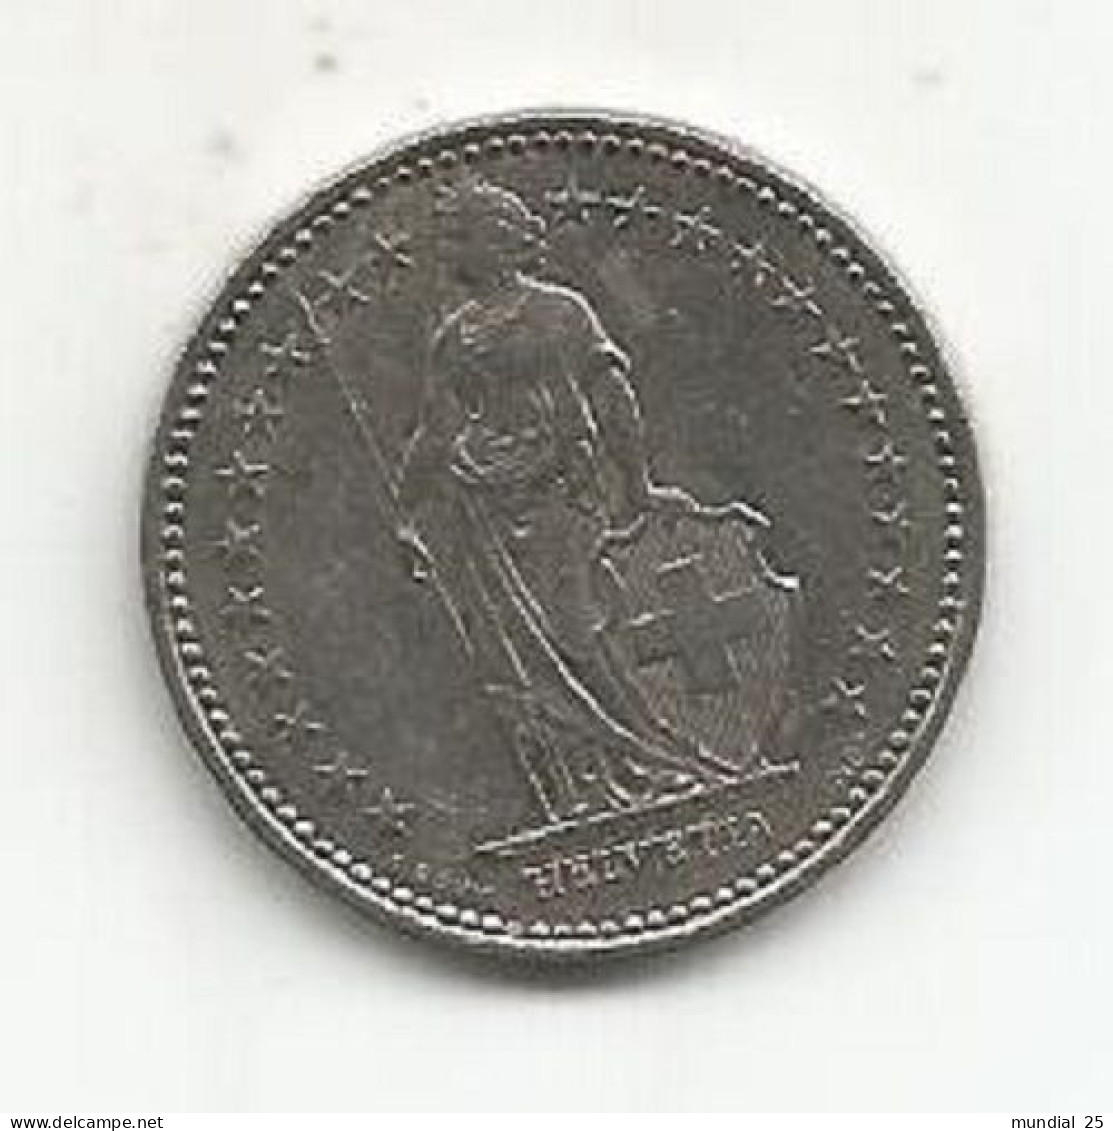 SWITZERLAND 1 FRANC 1985 - 1 Franc